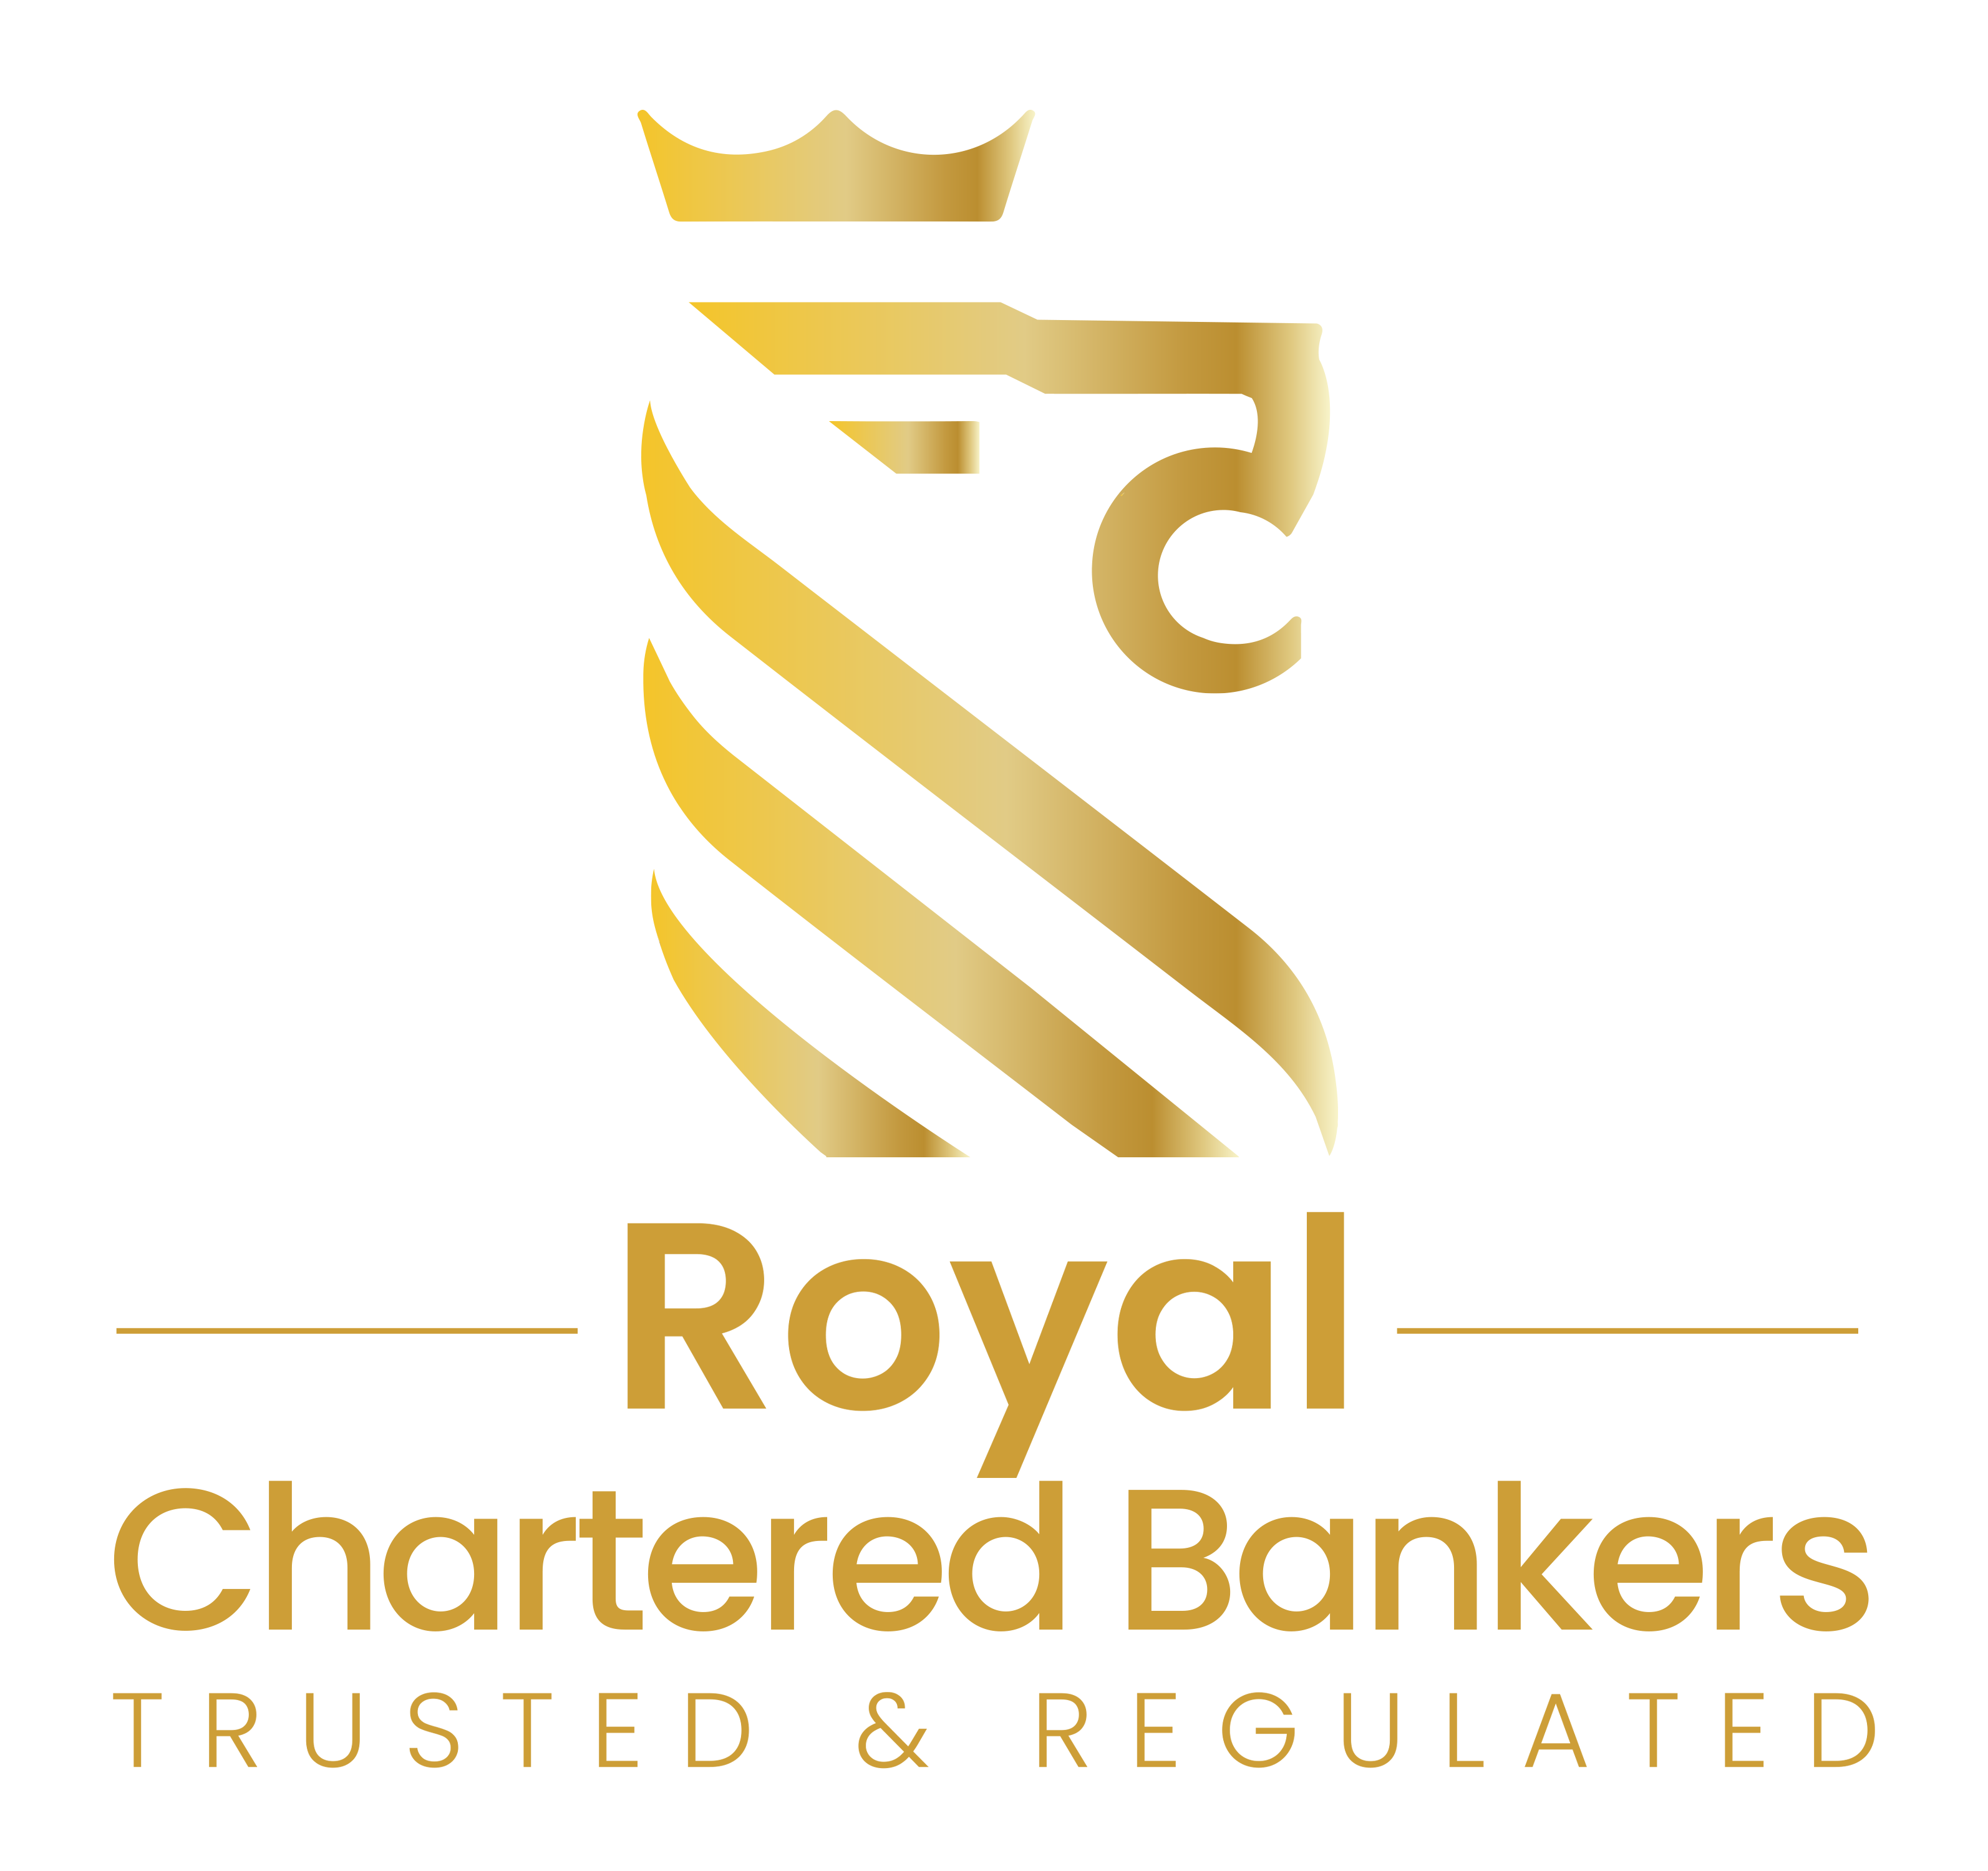 Royal Chartered Bankers